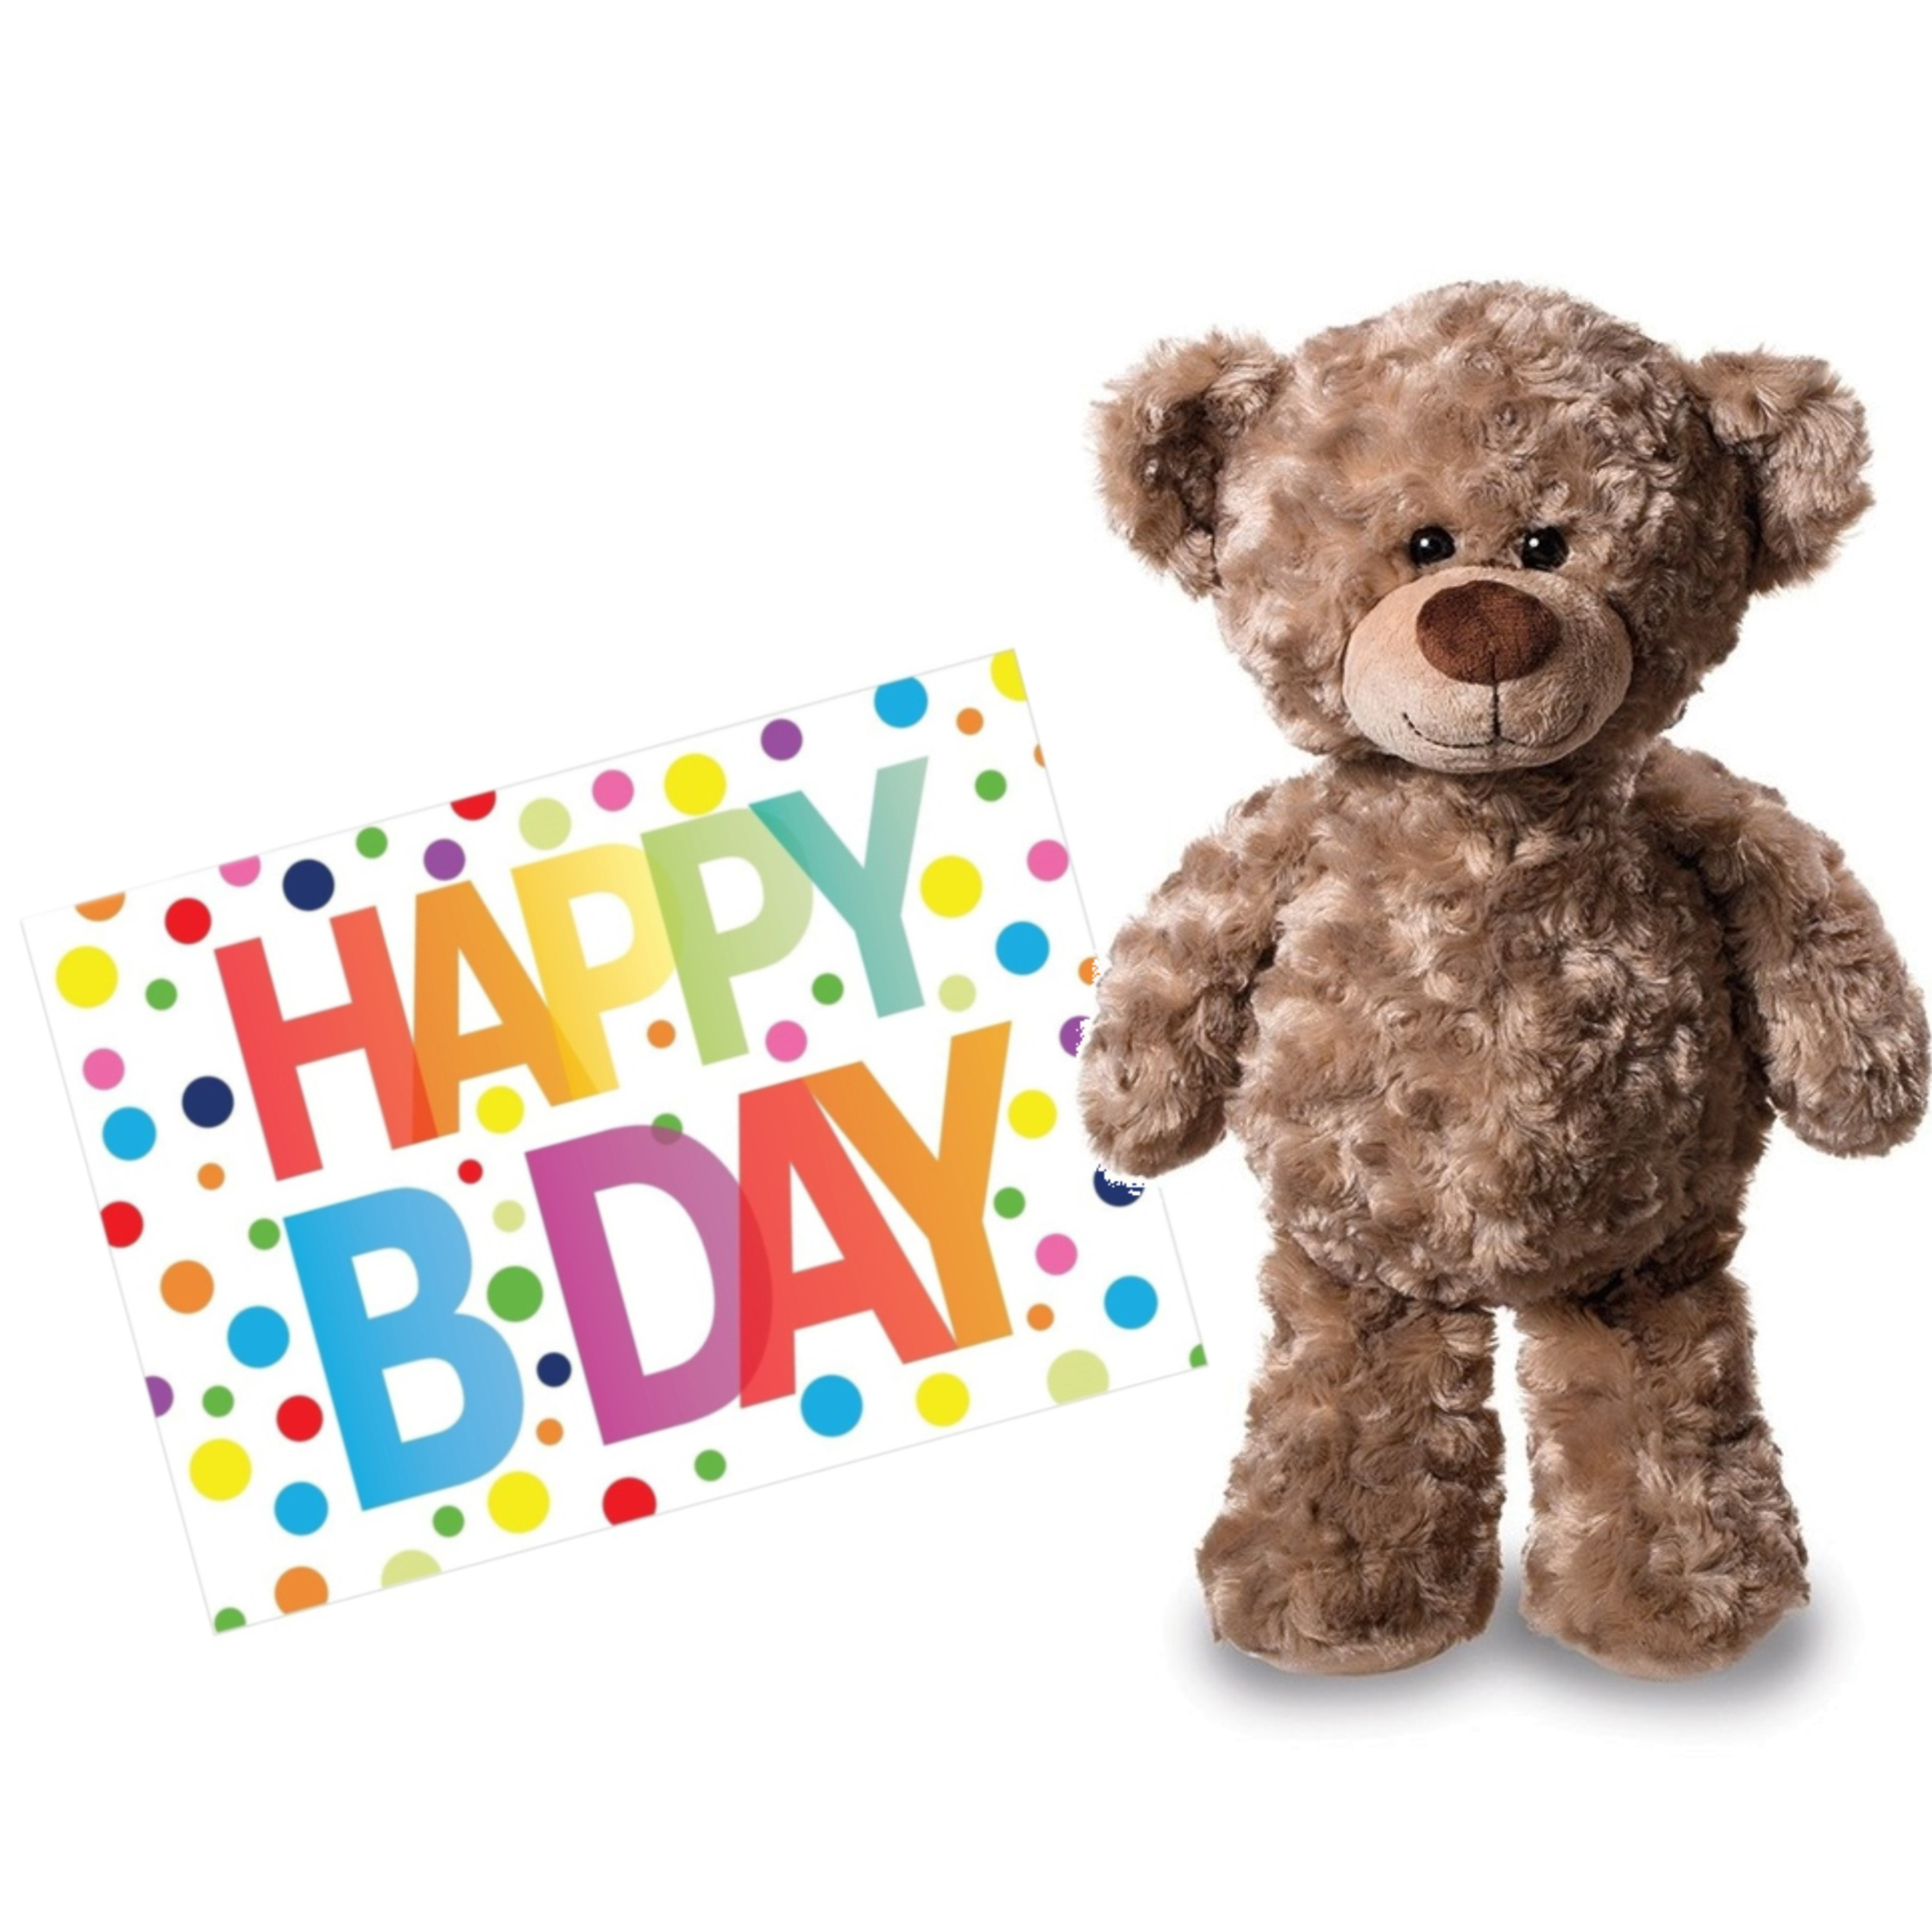 Pluche knuffel knuffelbeer 24 cm met A5-size Happy Birthday wenskaart